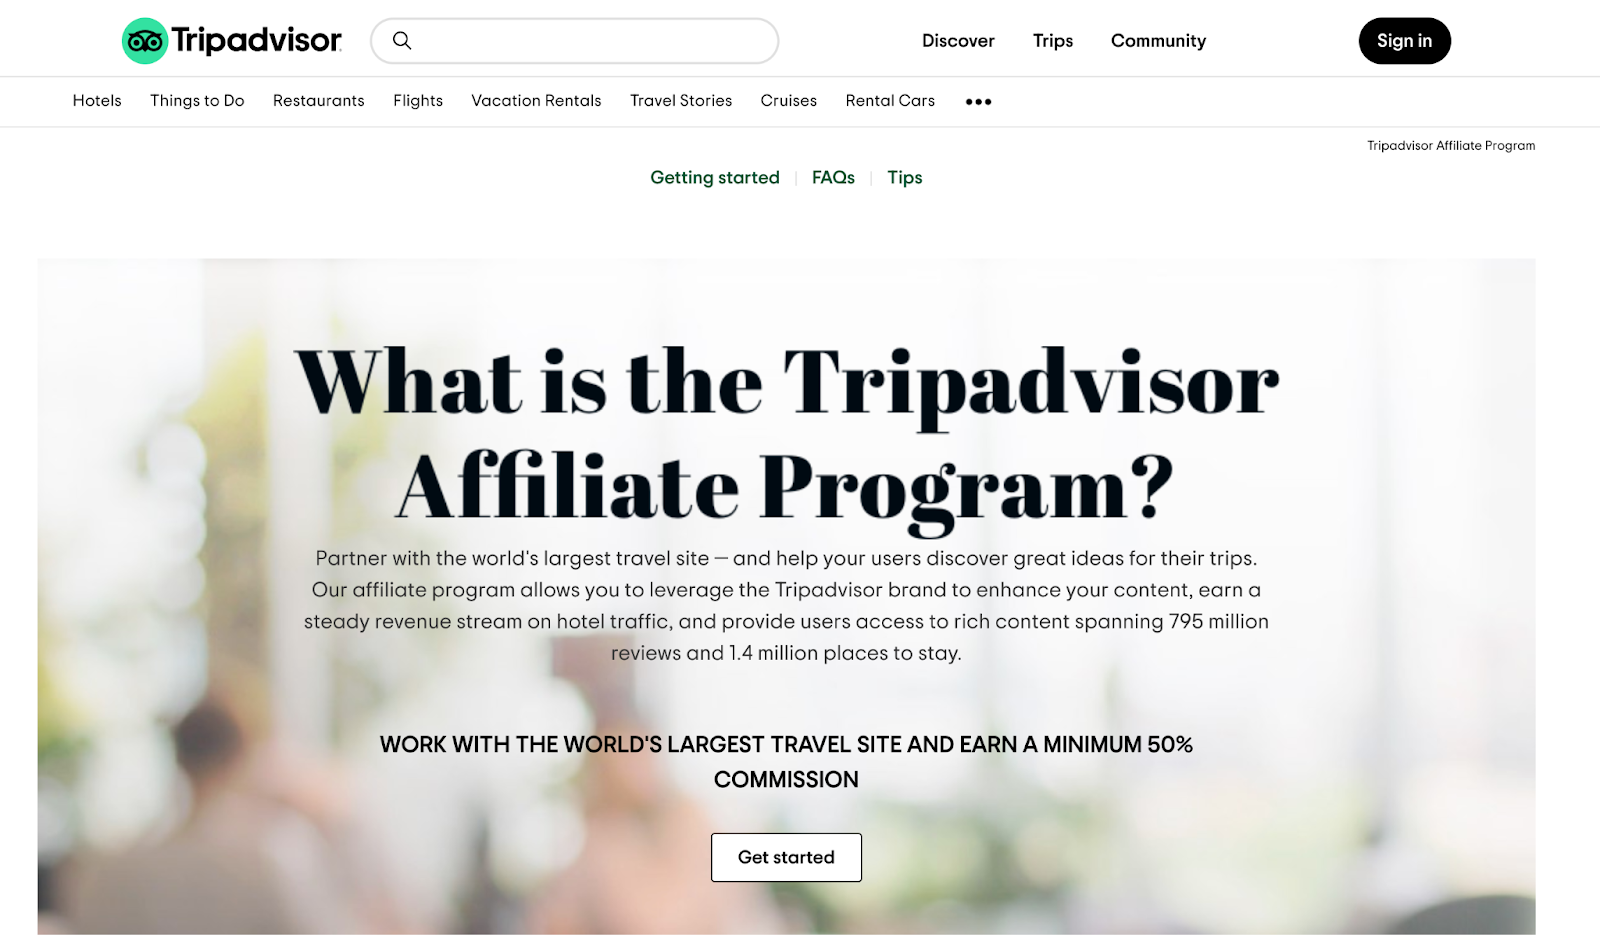 Tripadvisor's affiliate program page